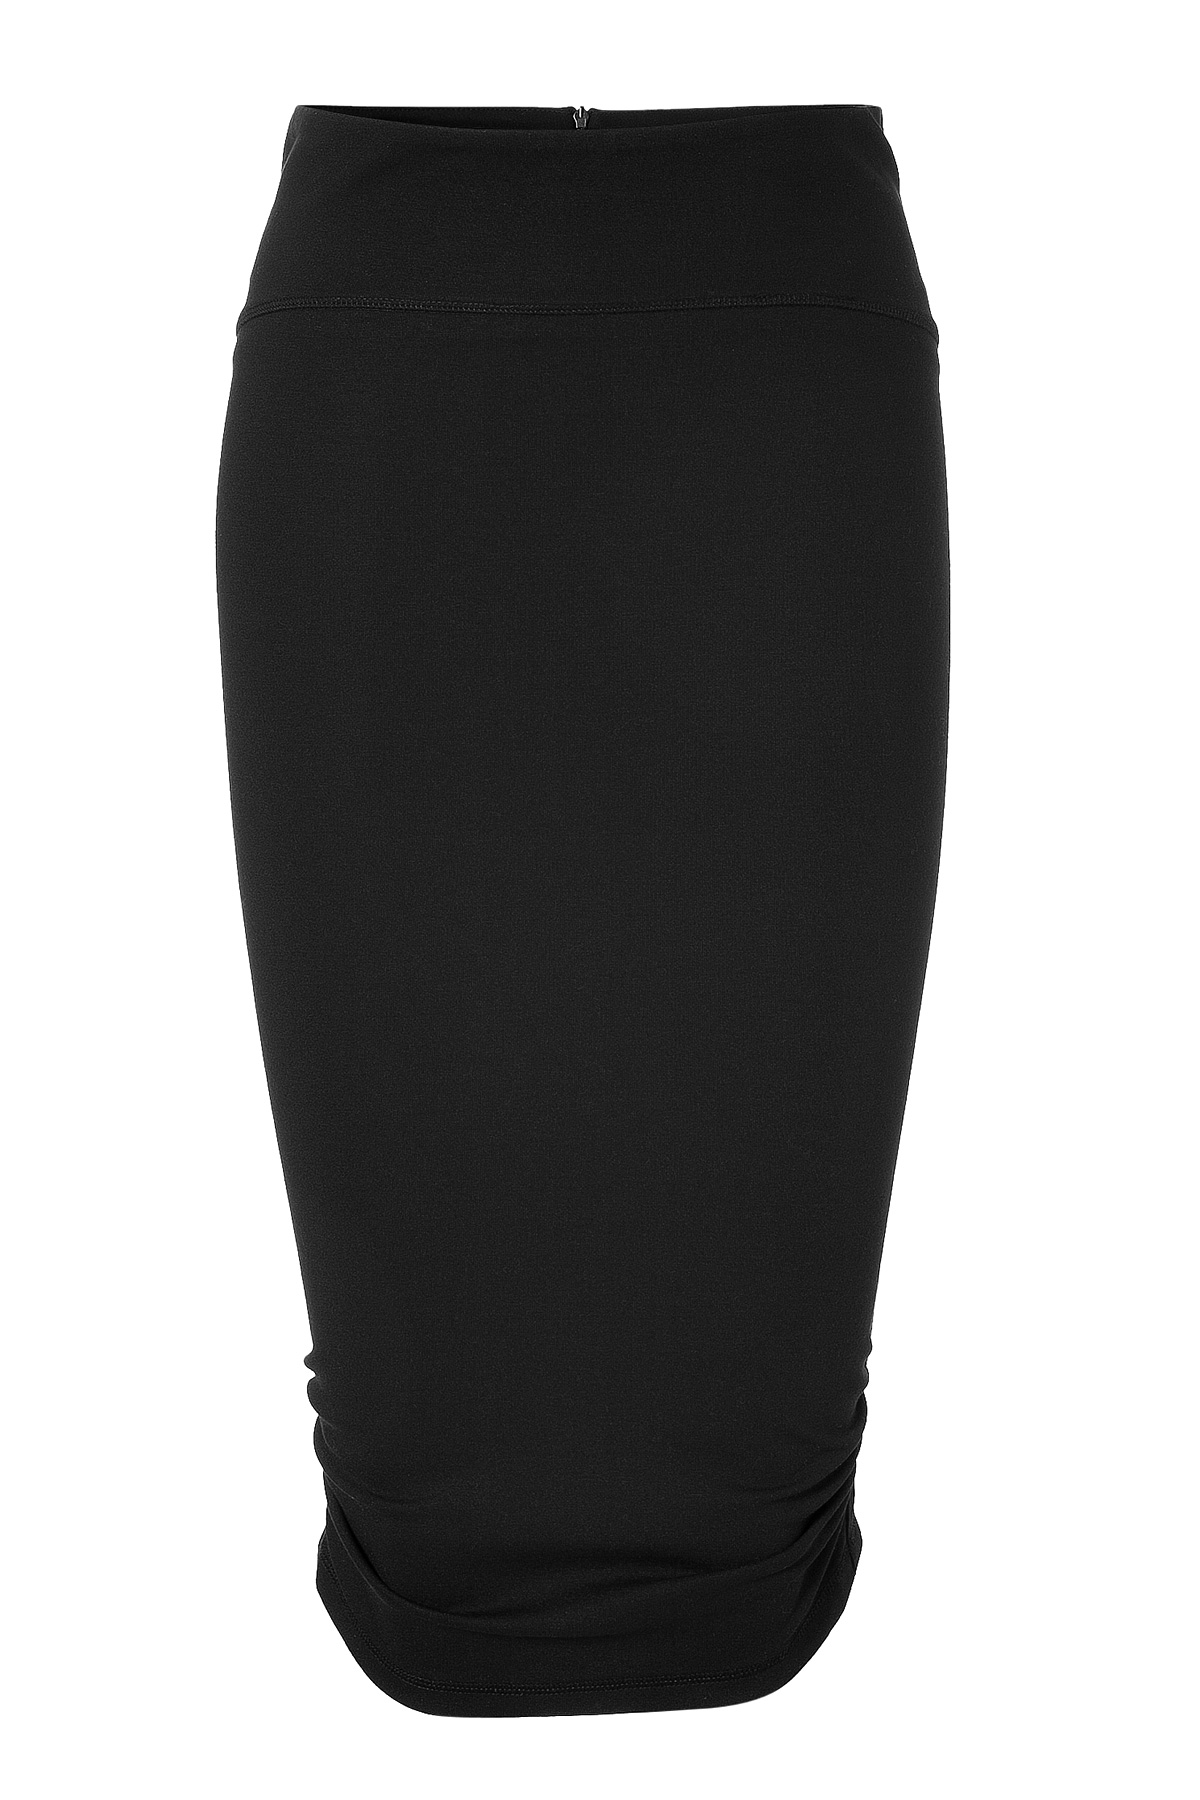 Mcq By Alexander Mcqueen Black Draped Pencil Skirt in Black | Lyst